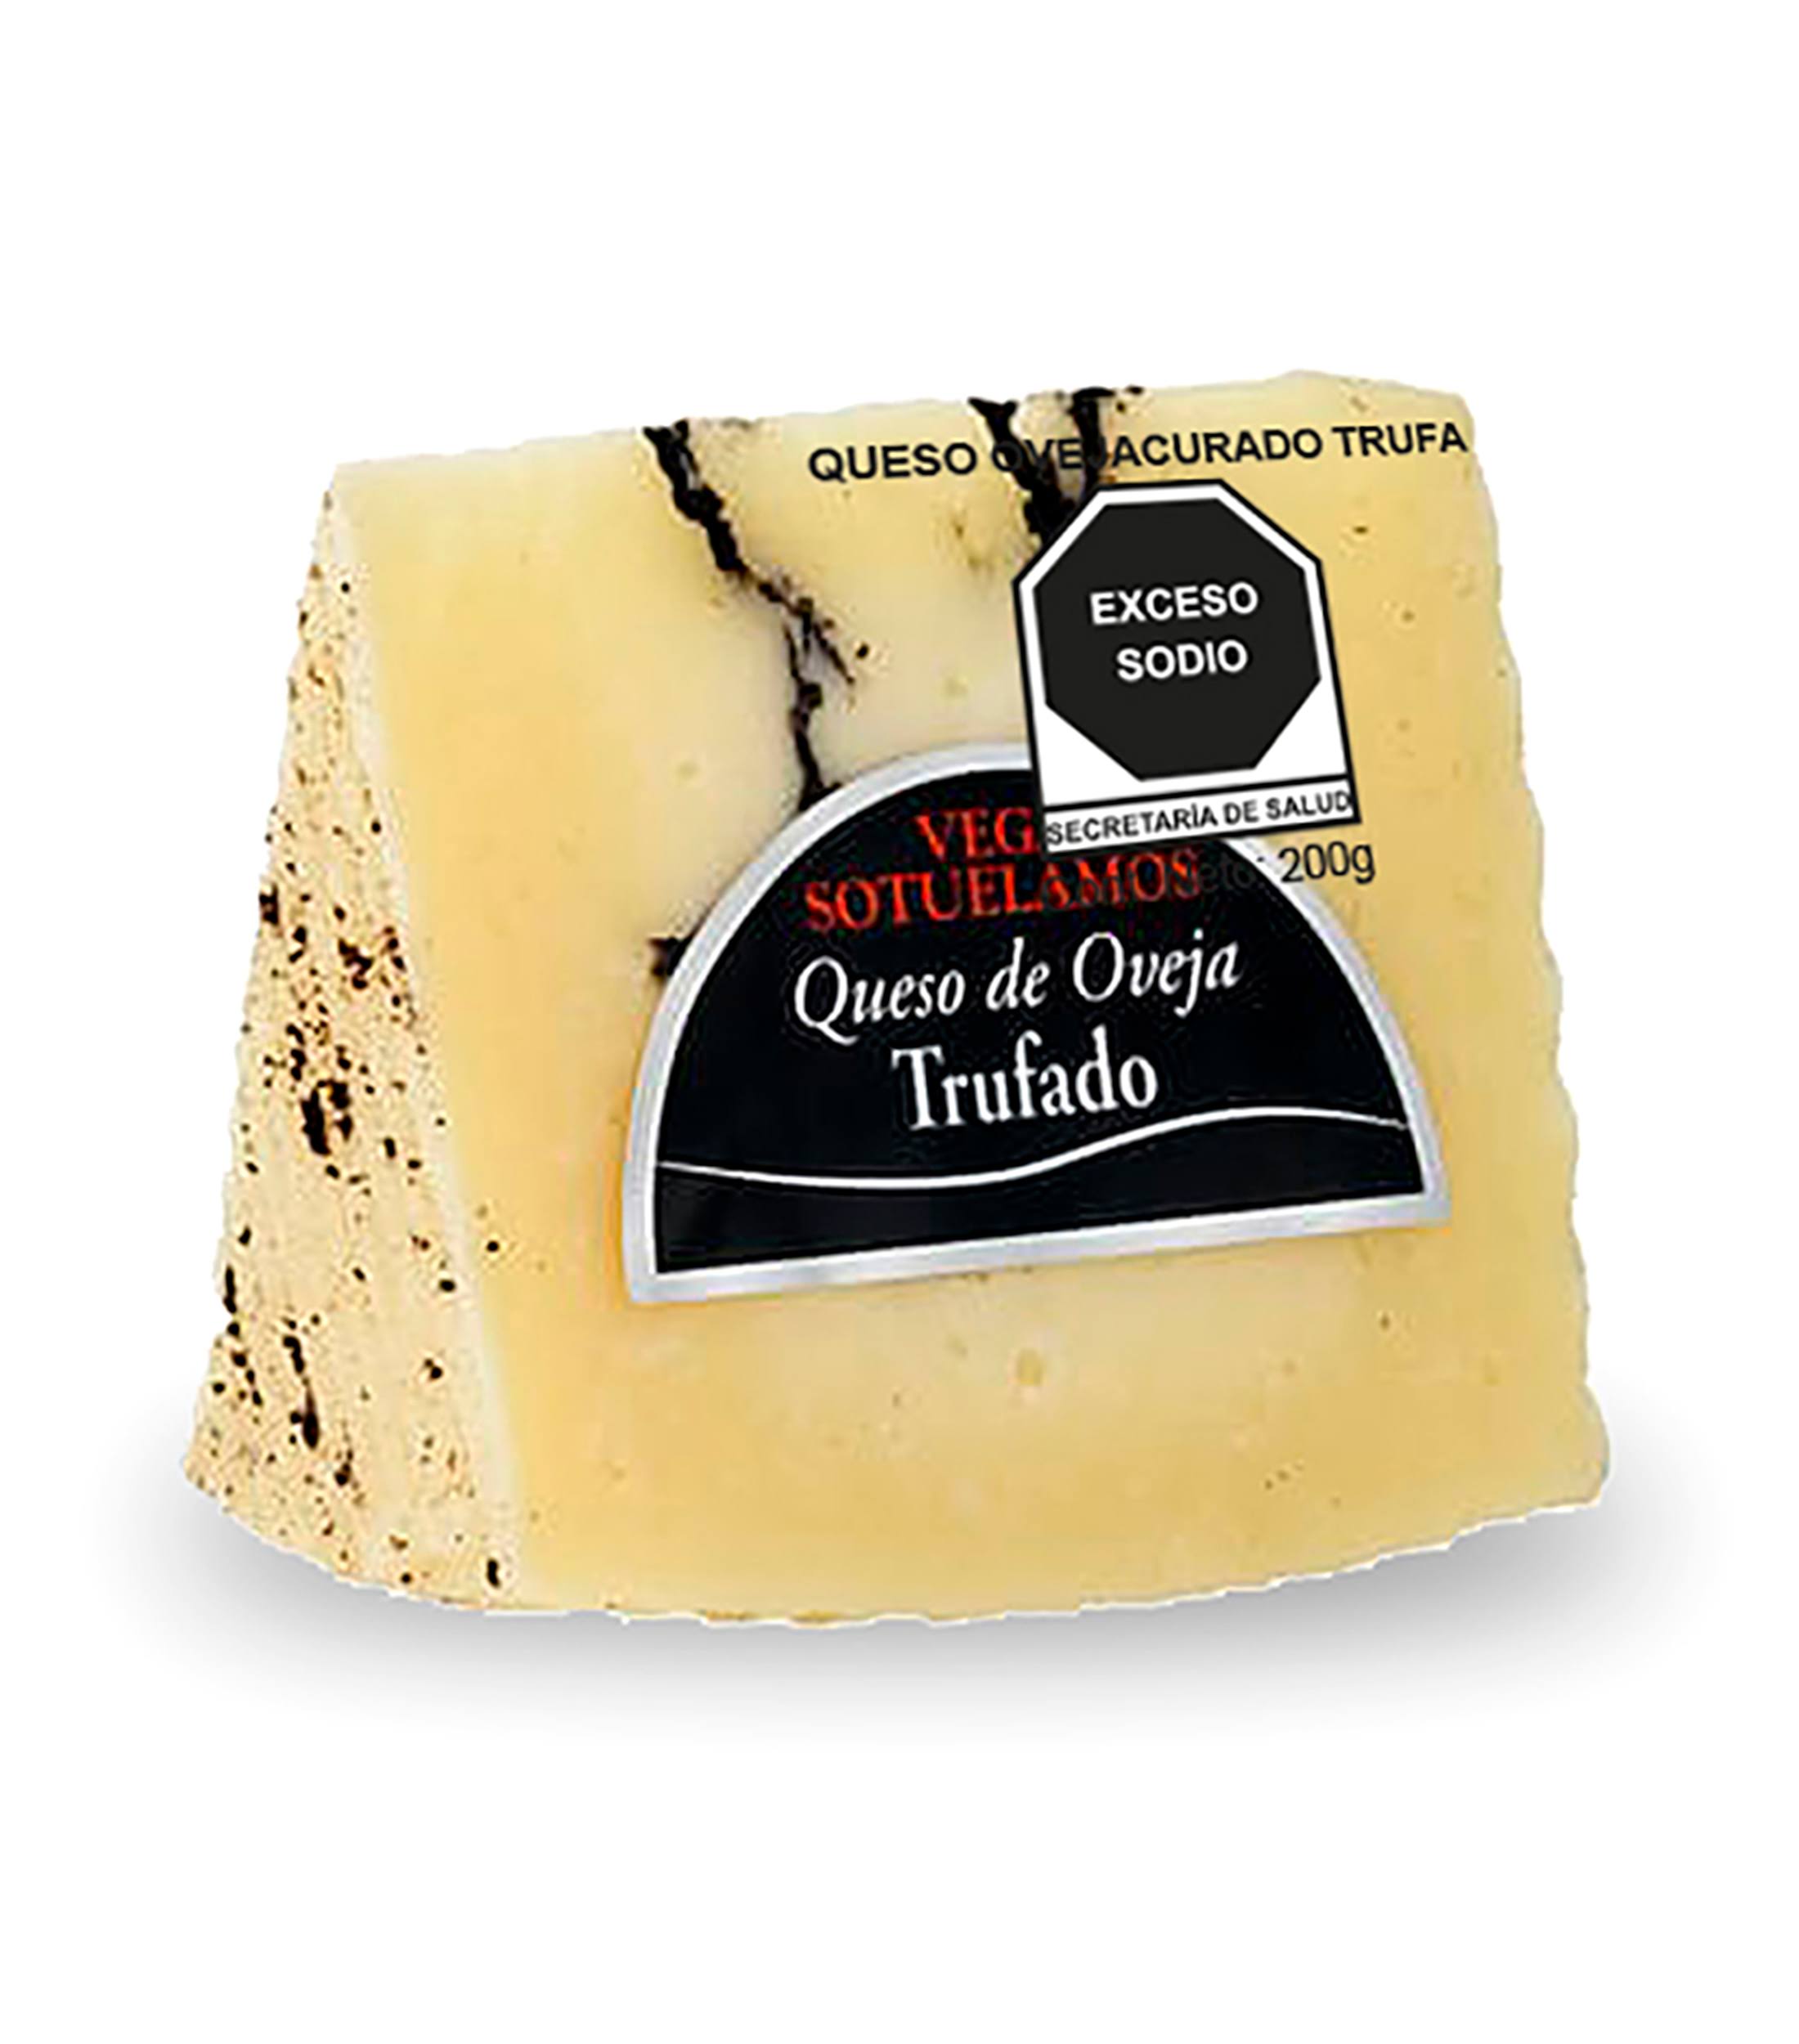 Oveja Truffle Cheese